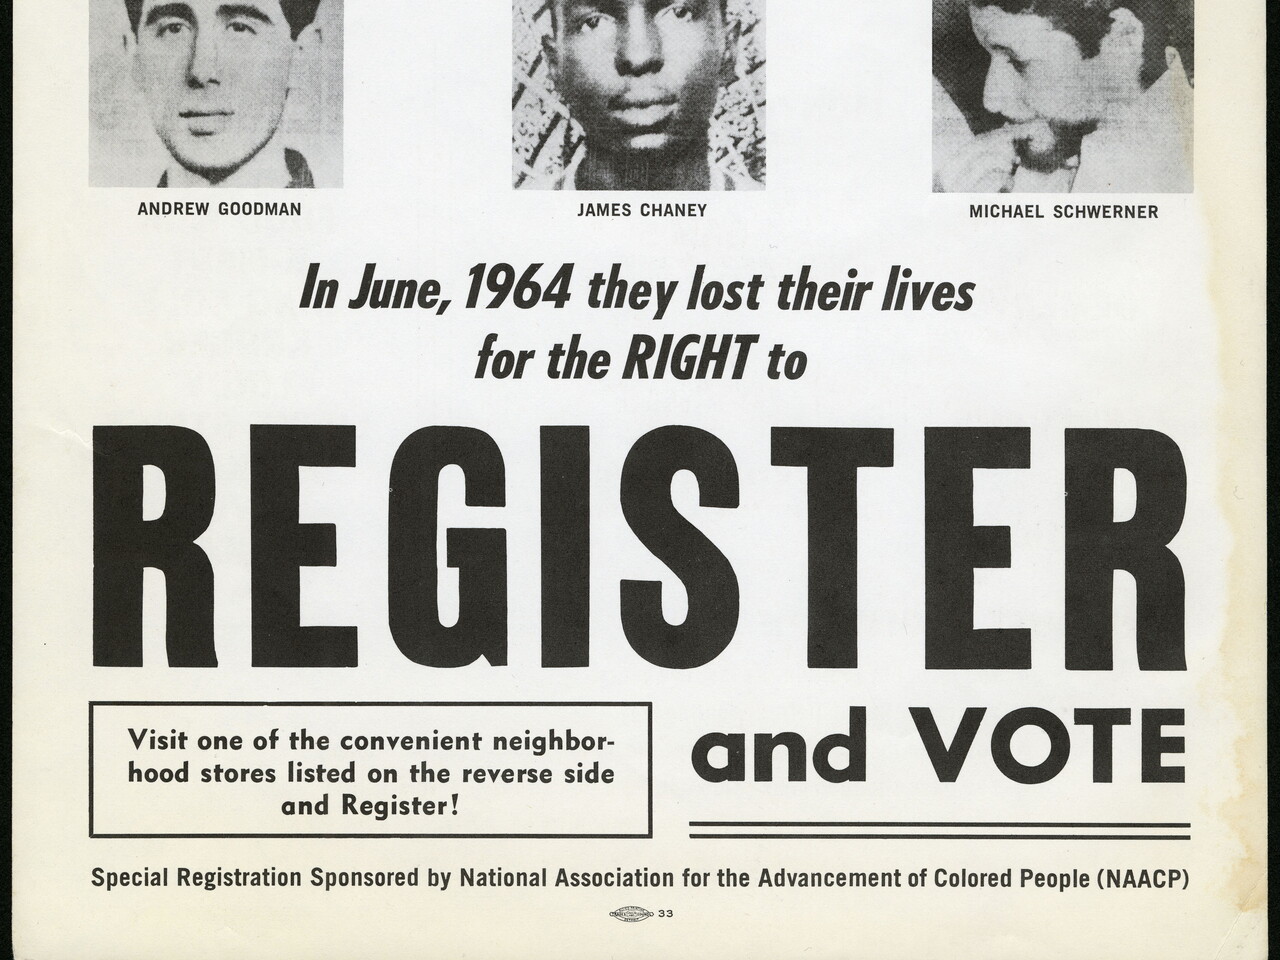 Register and Vote flyer memorializing Schwerner, Chaney, and Goodman